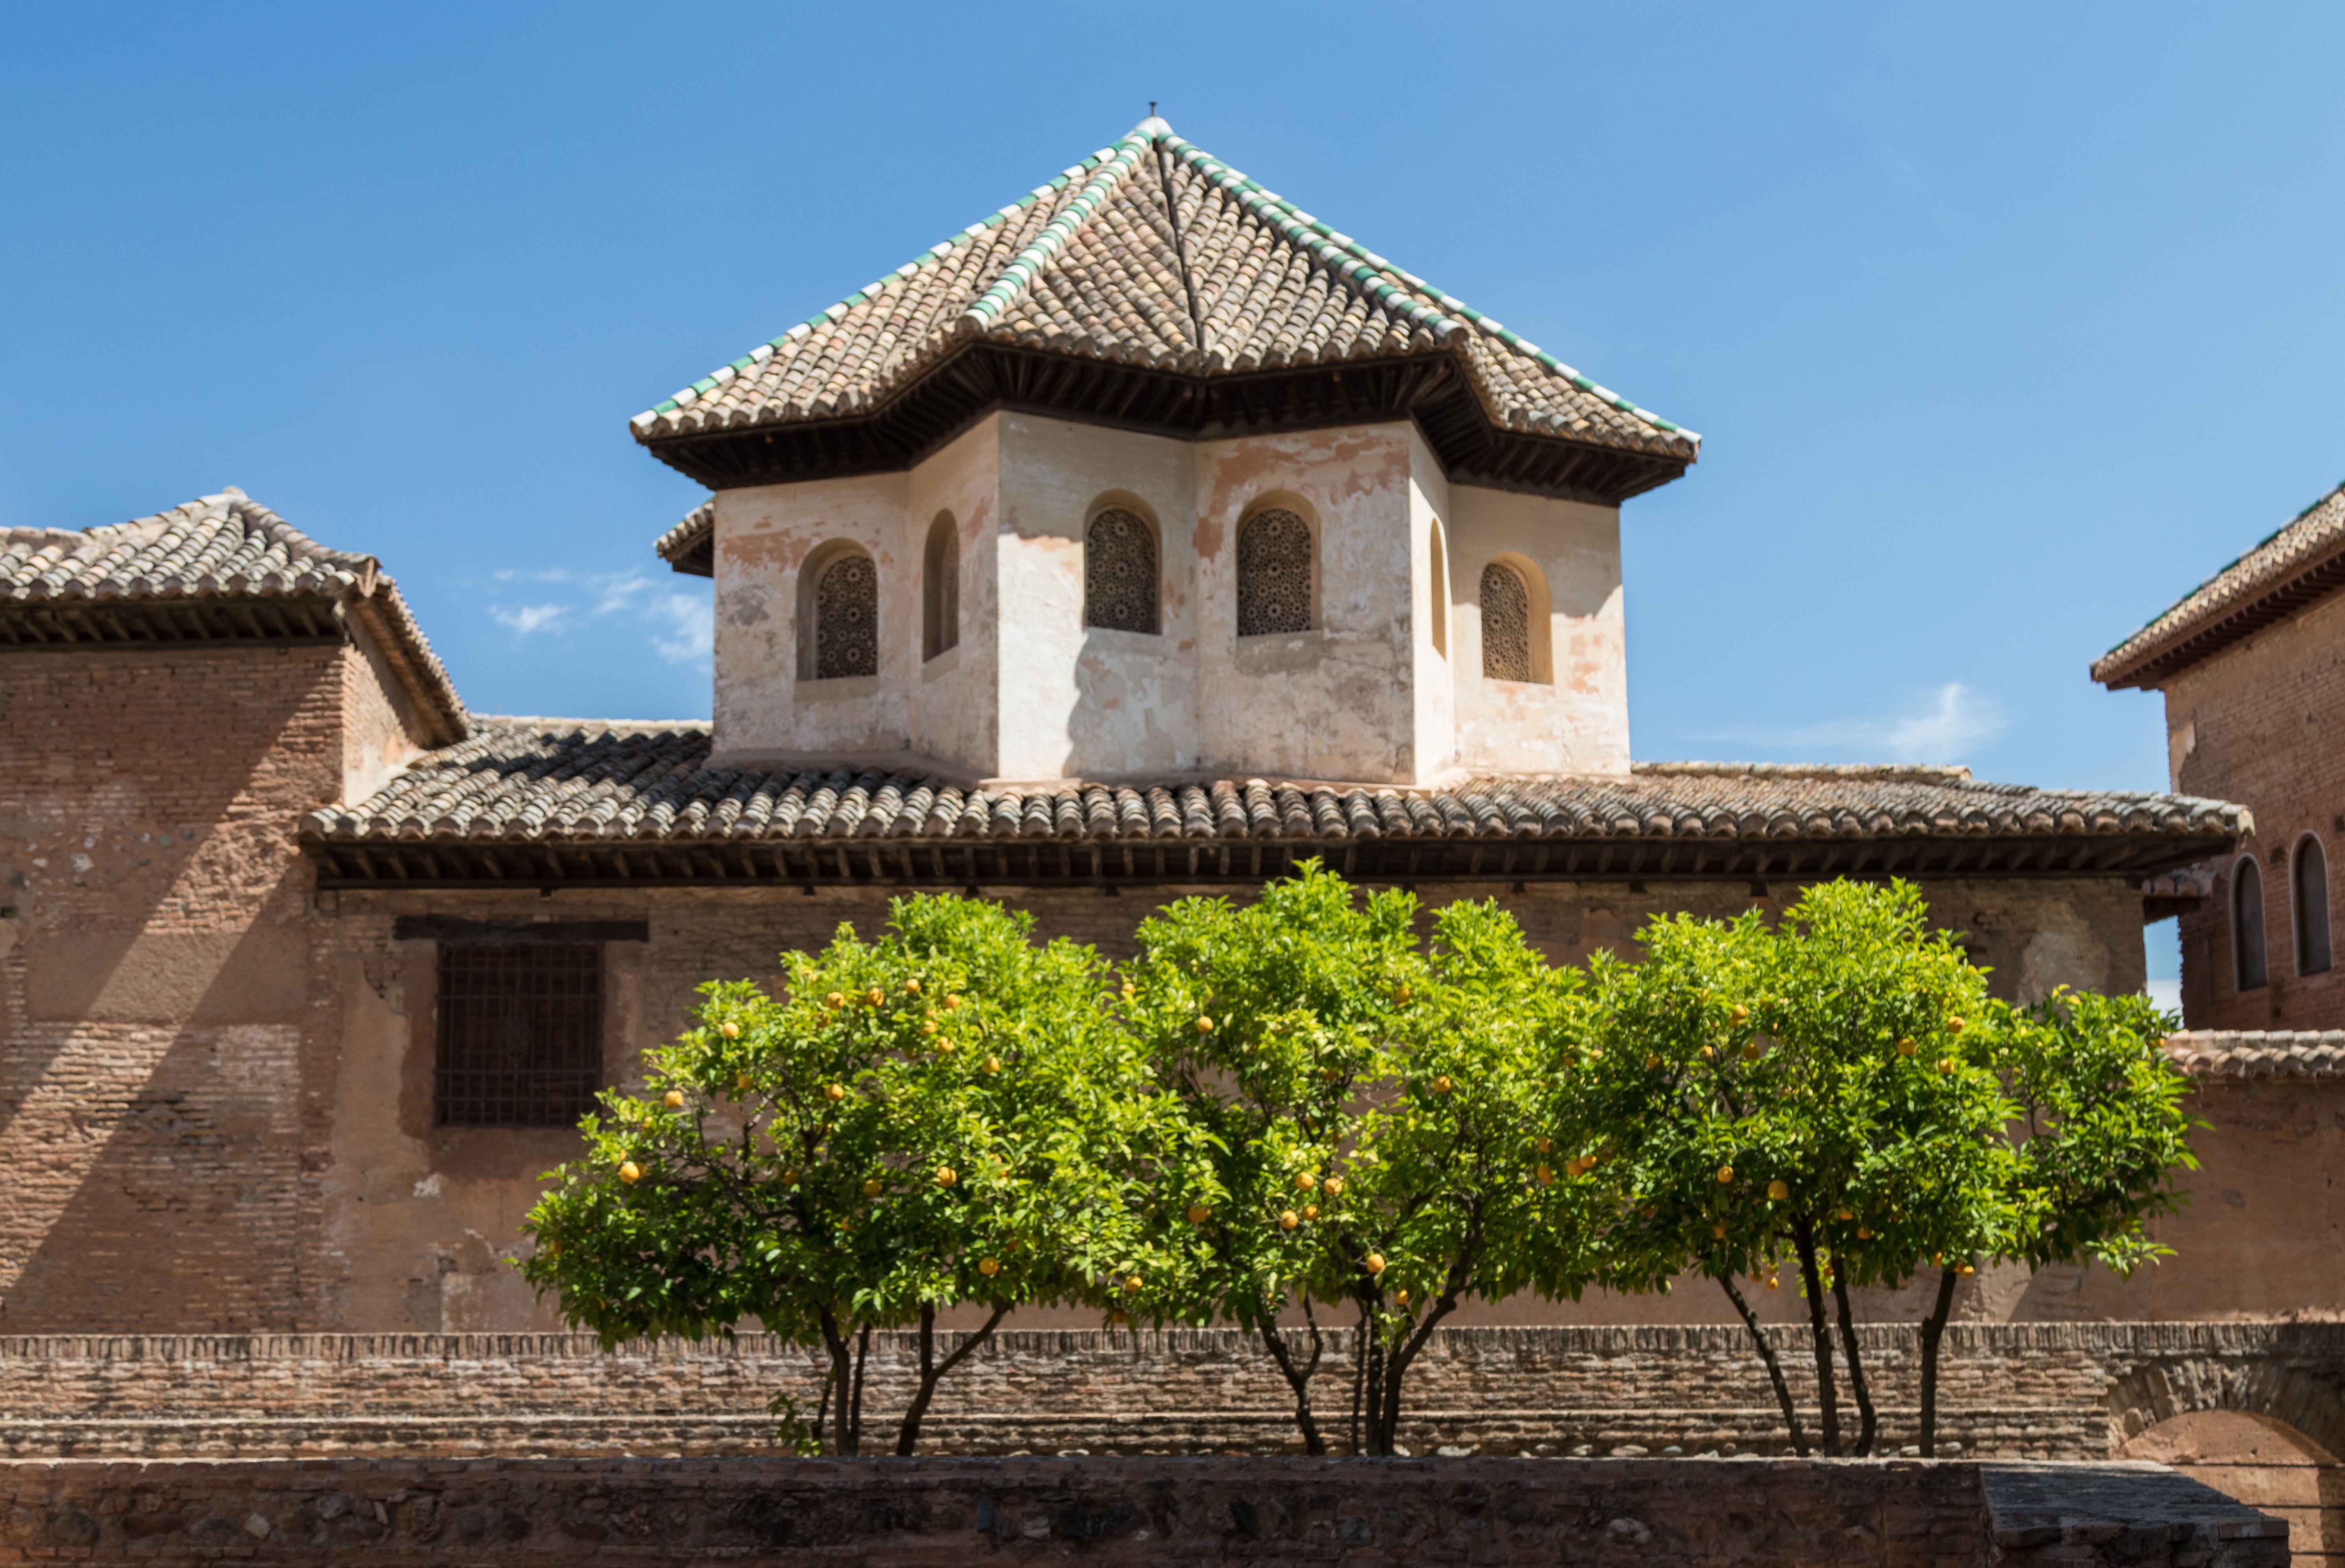 Mediterranean Cruise: Alhambra Palace, Granada, Spain | https://www.roseclearfield.com